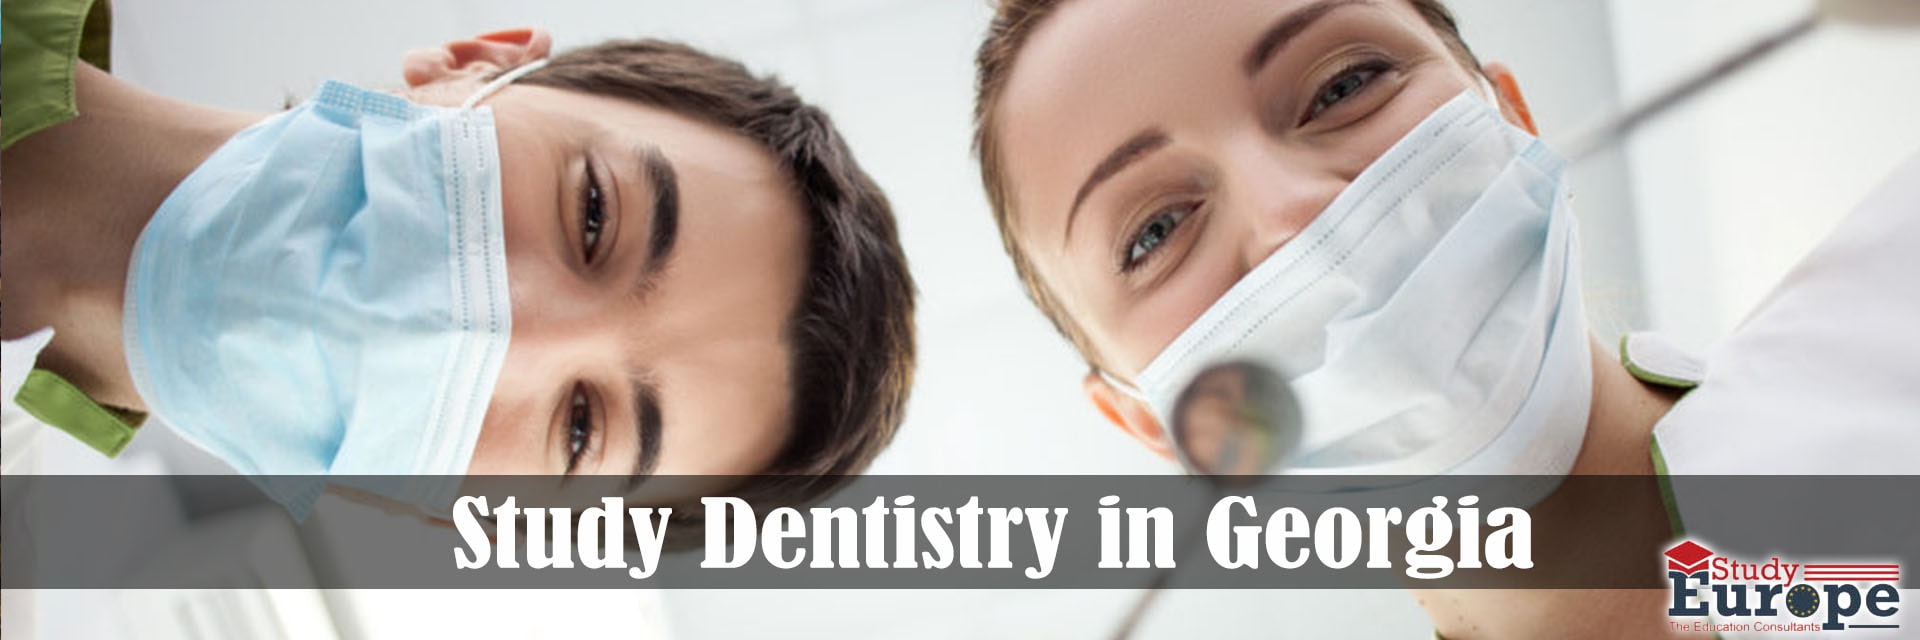 Dentistry Course in Georgia